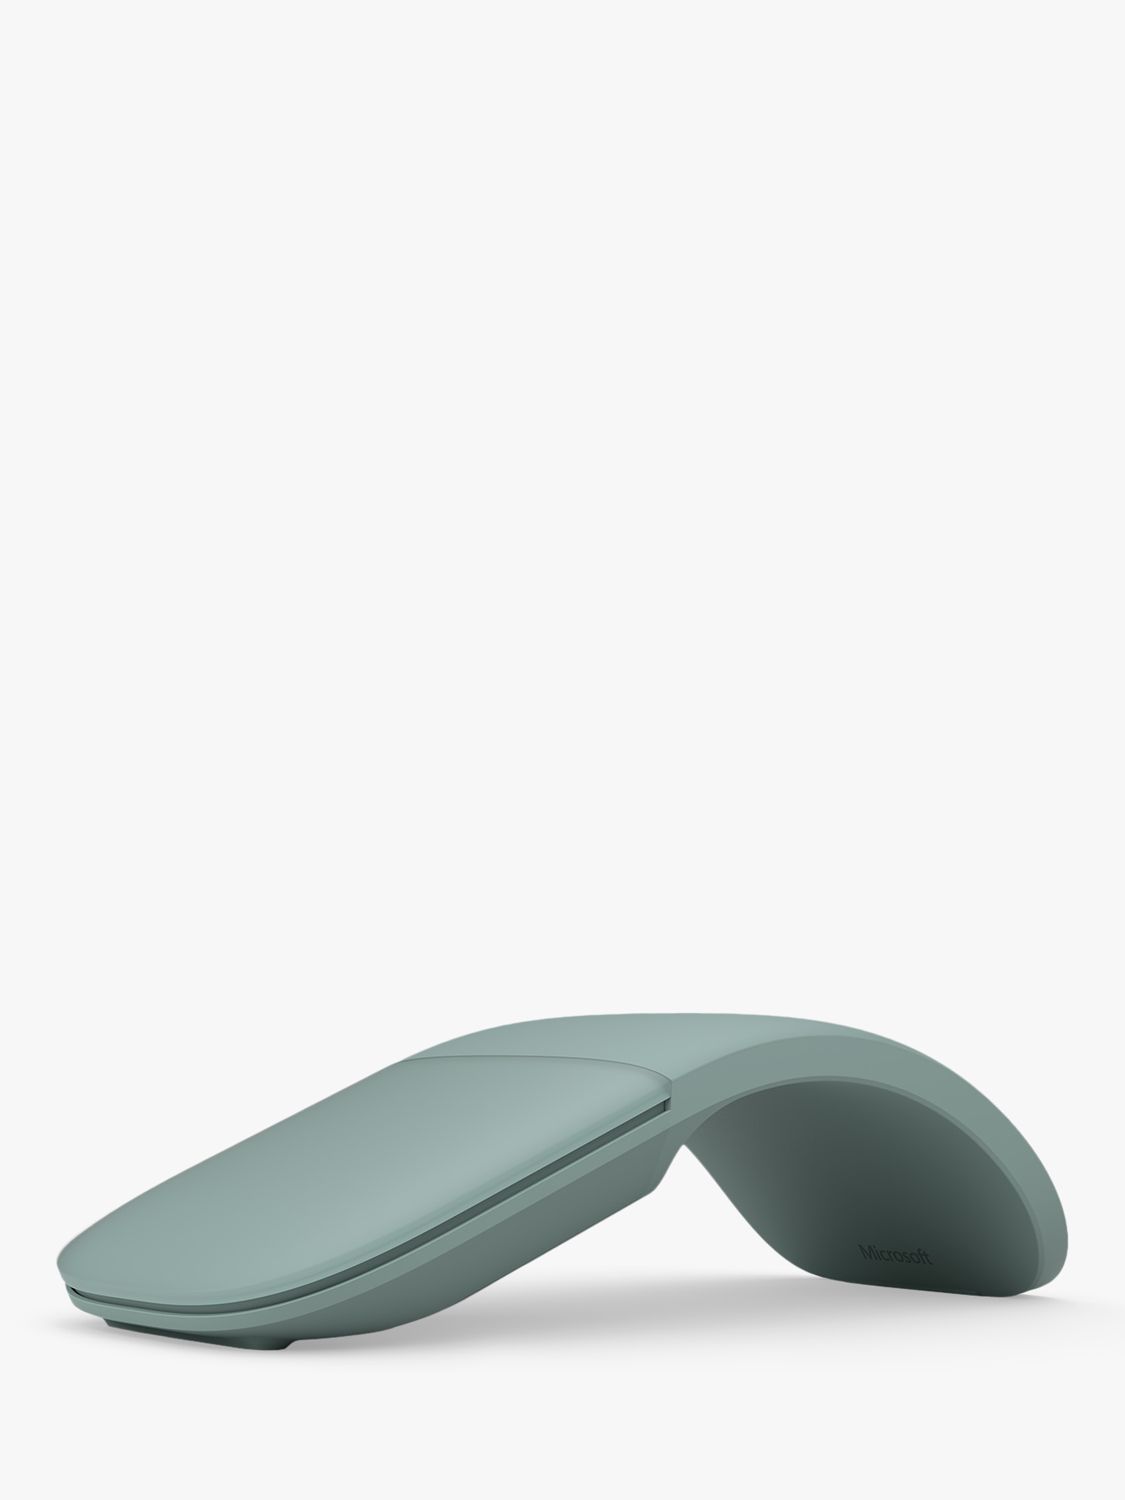 Microsoft Arc Bluetooth Wireless Mouse, Sage